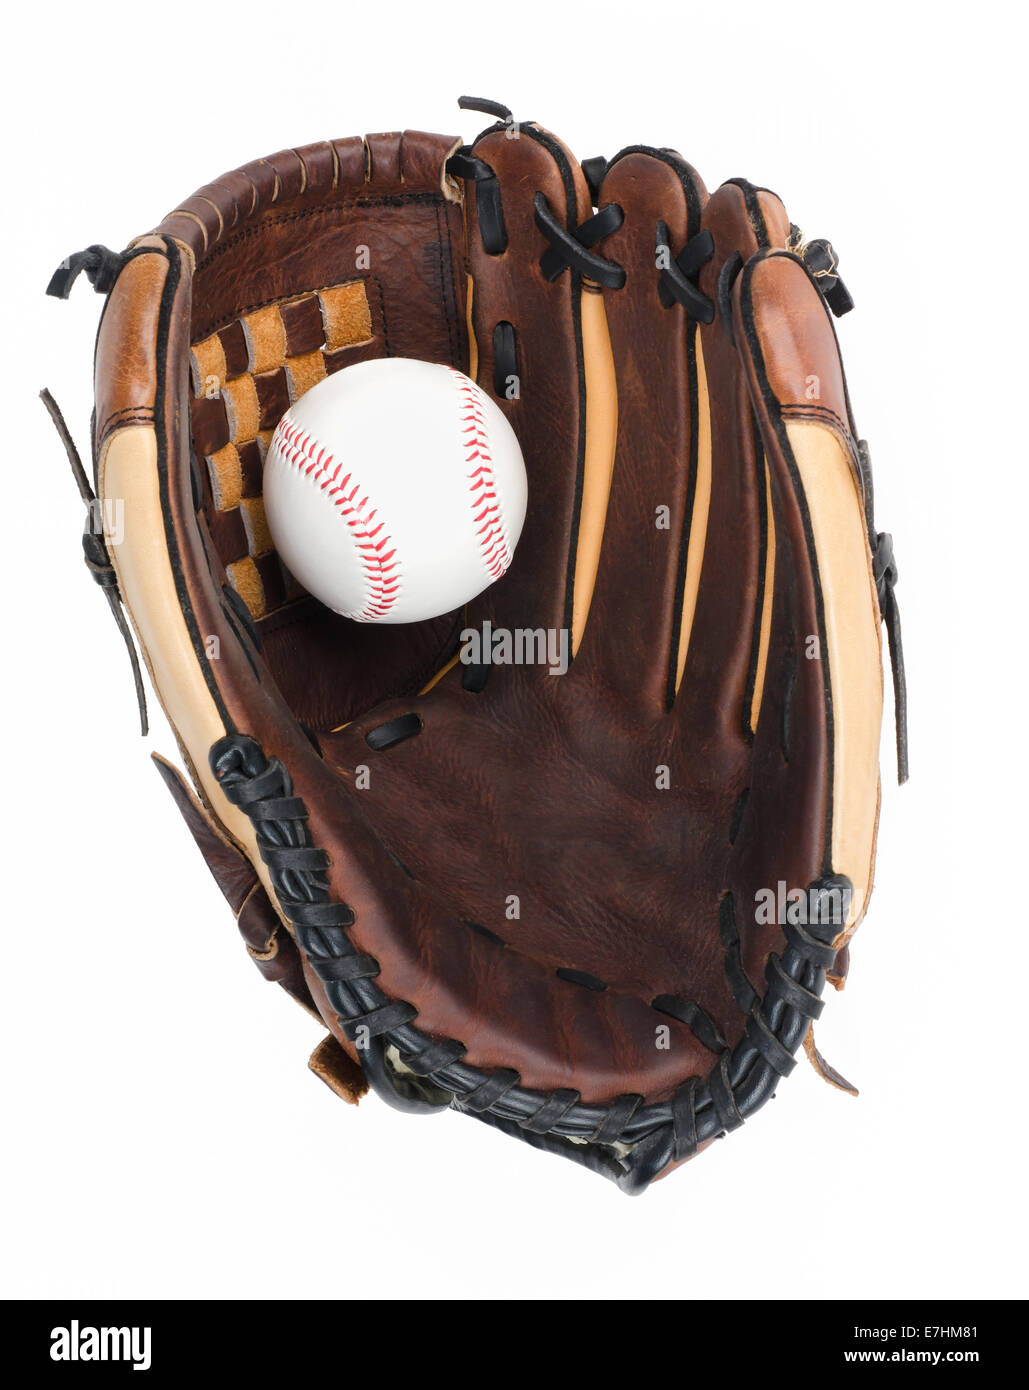 Baseball Glove and Ball. Stock Photo